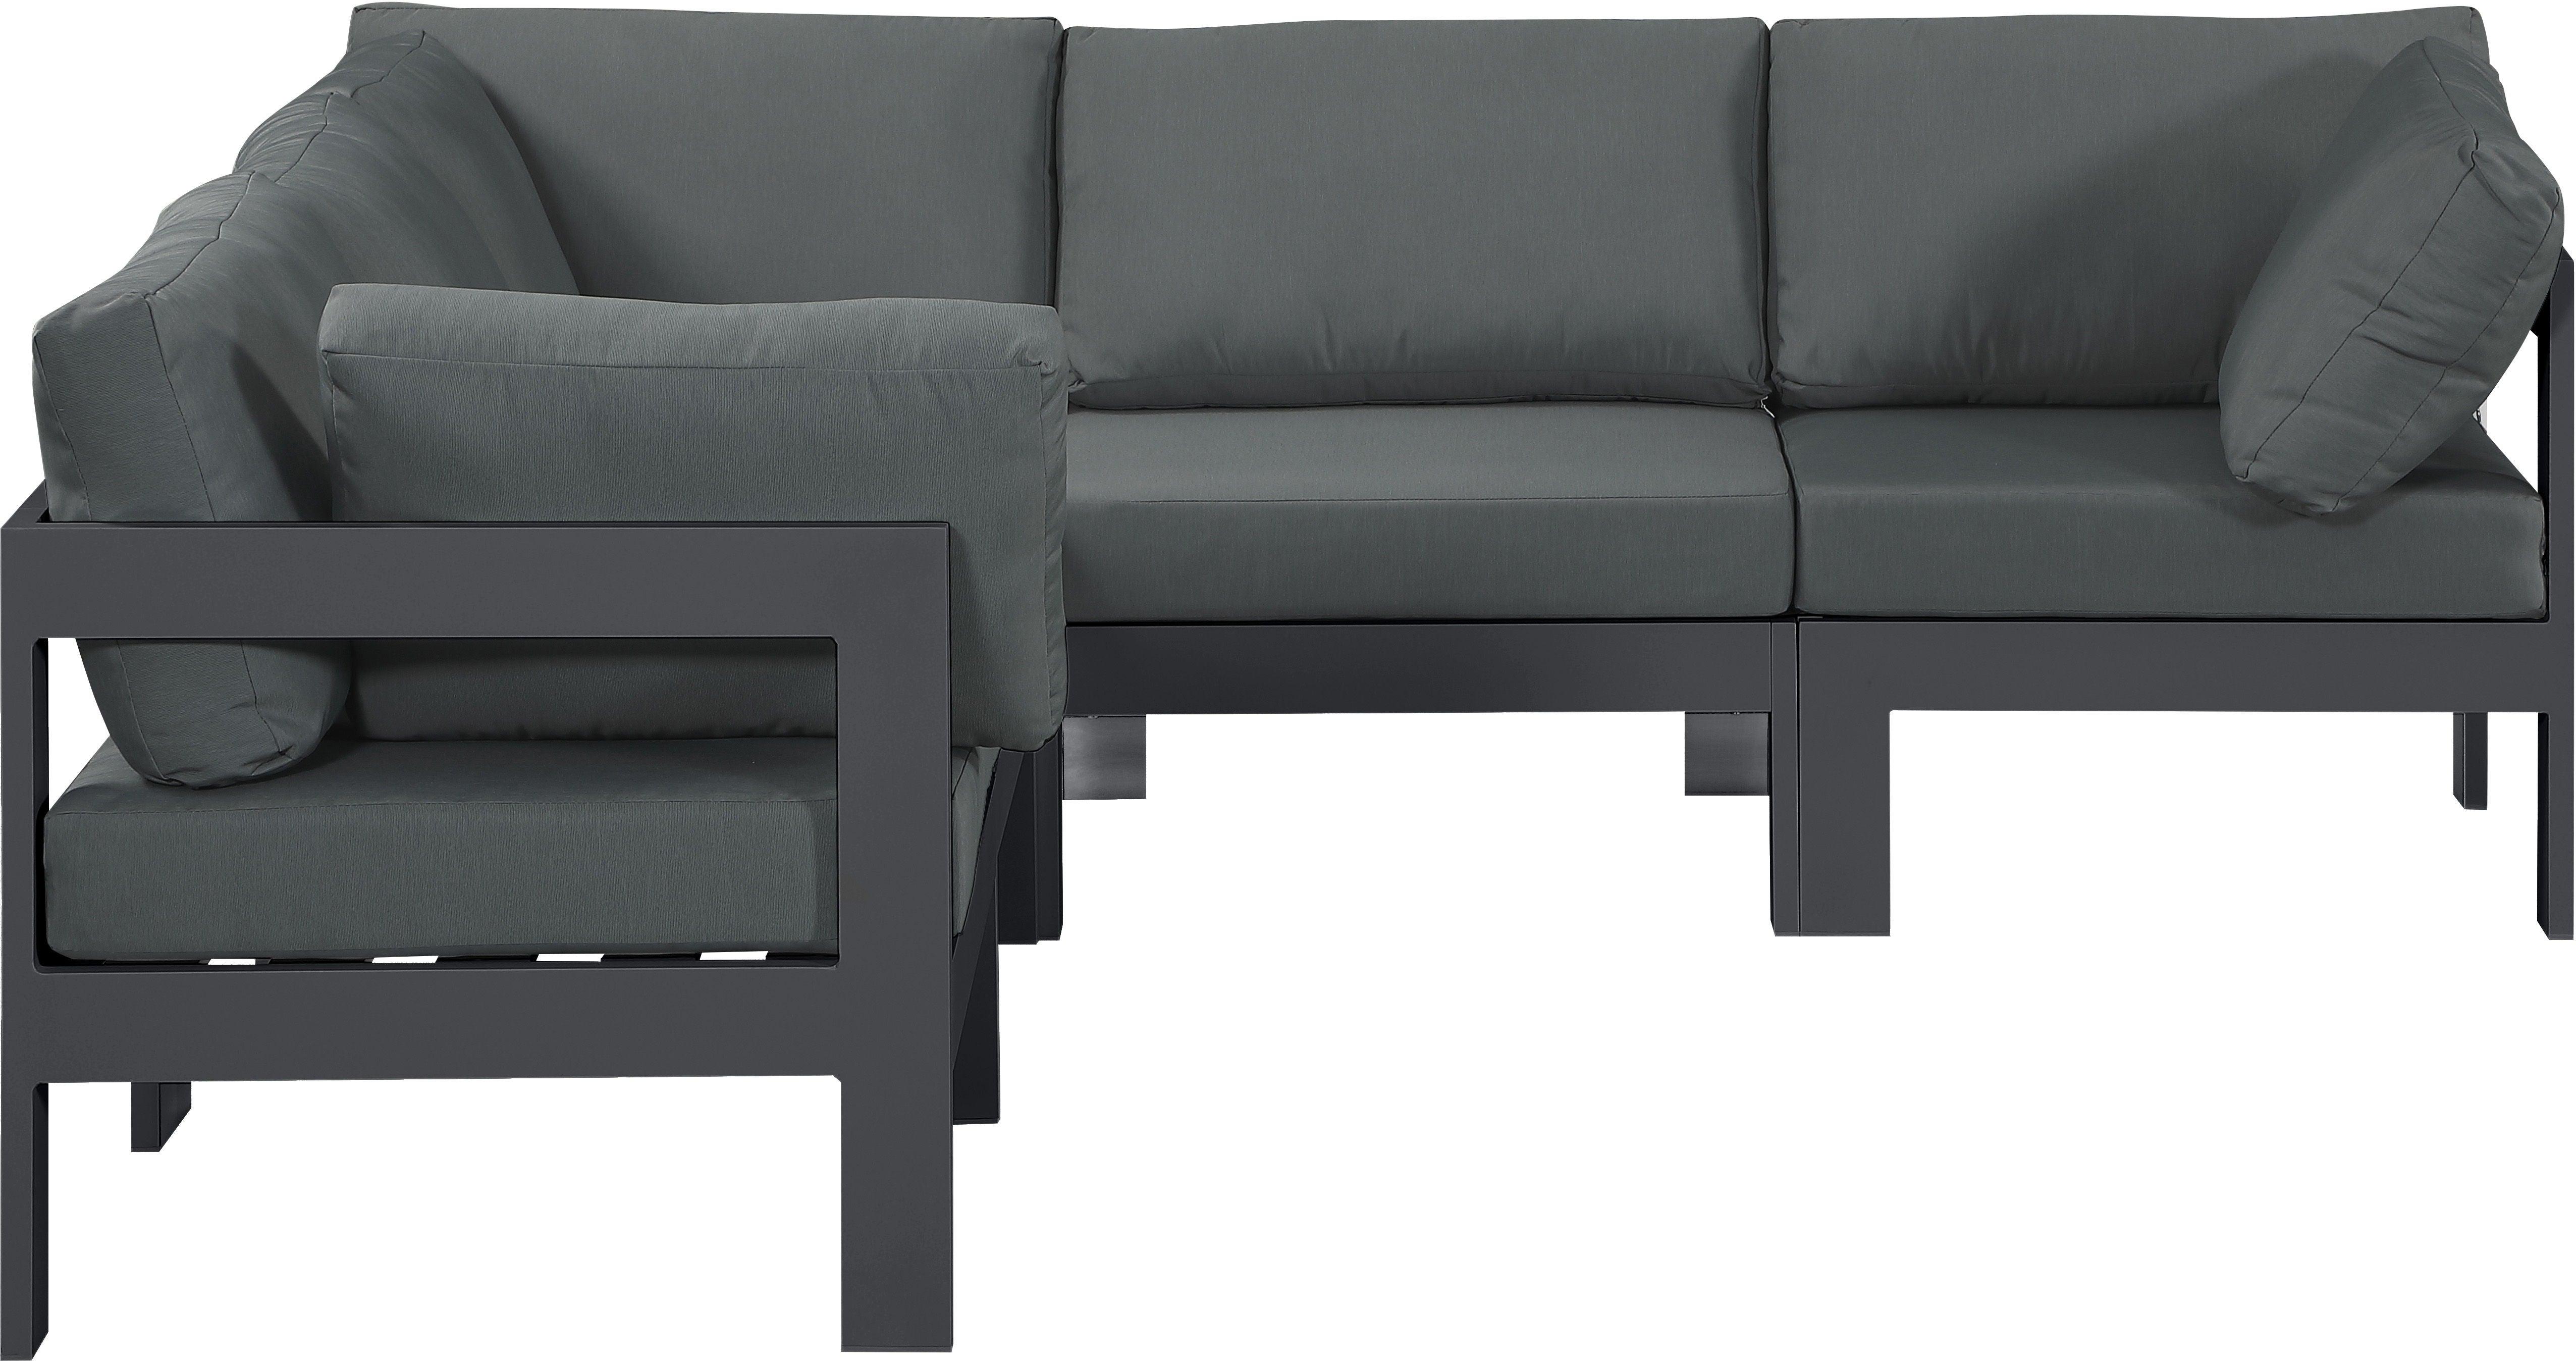 Meridian Furniture - Nizuc - Outdoor Patio Modular Sectional 5 Piece - Grey - 5th Avenue Furniture